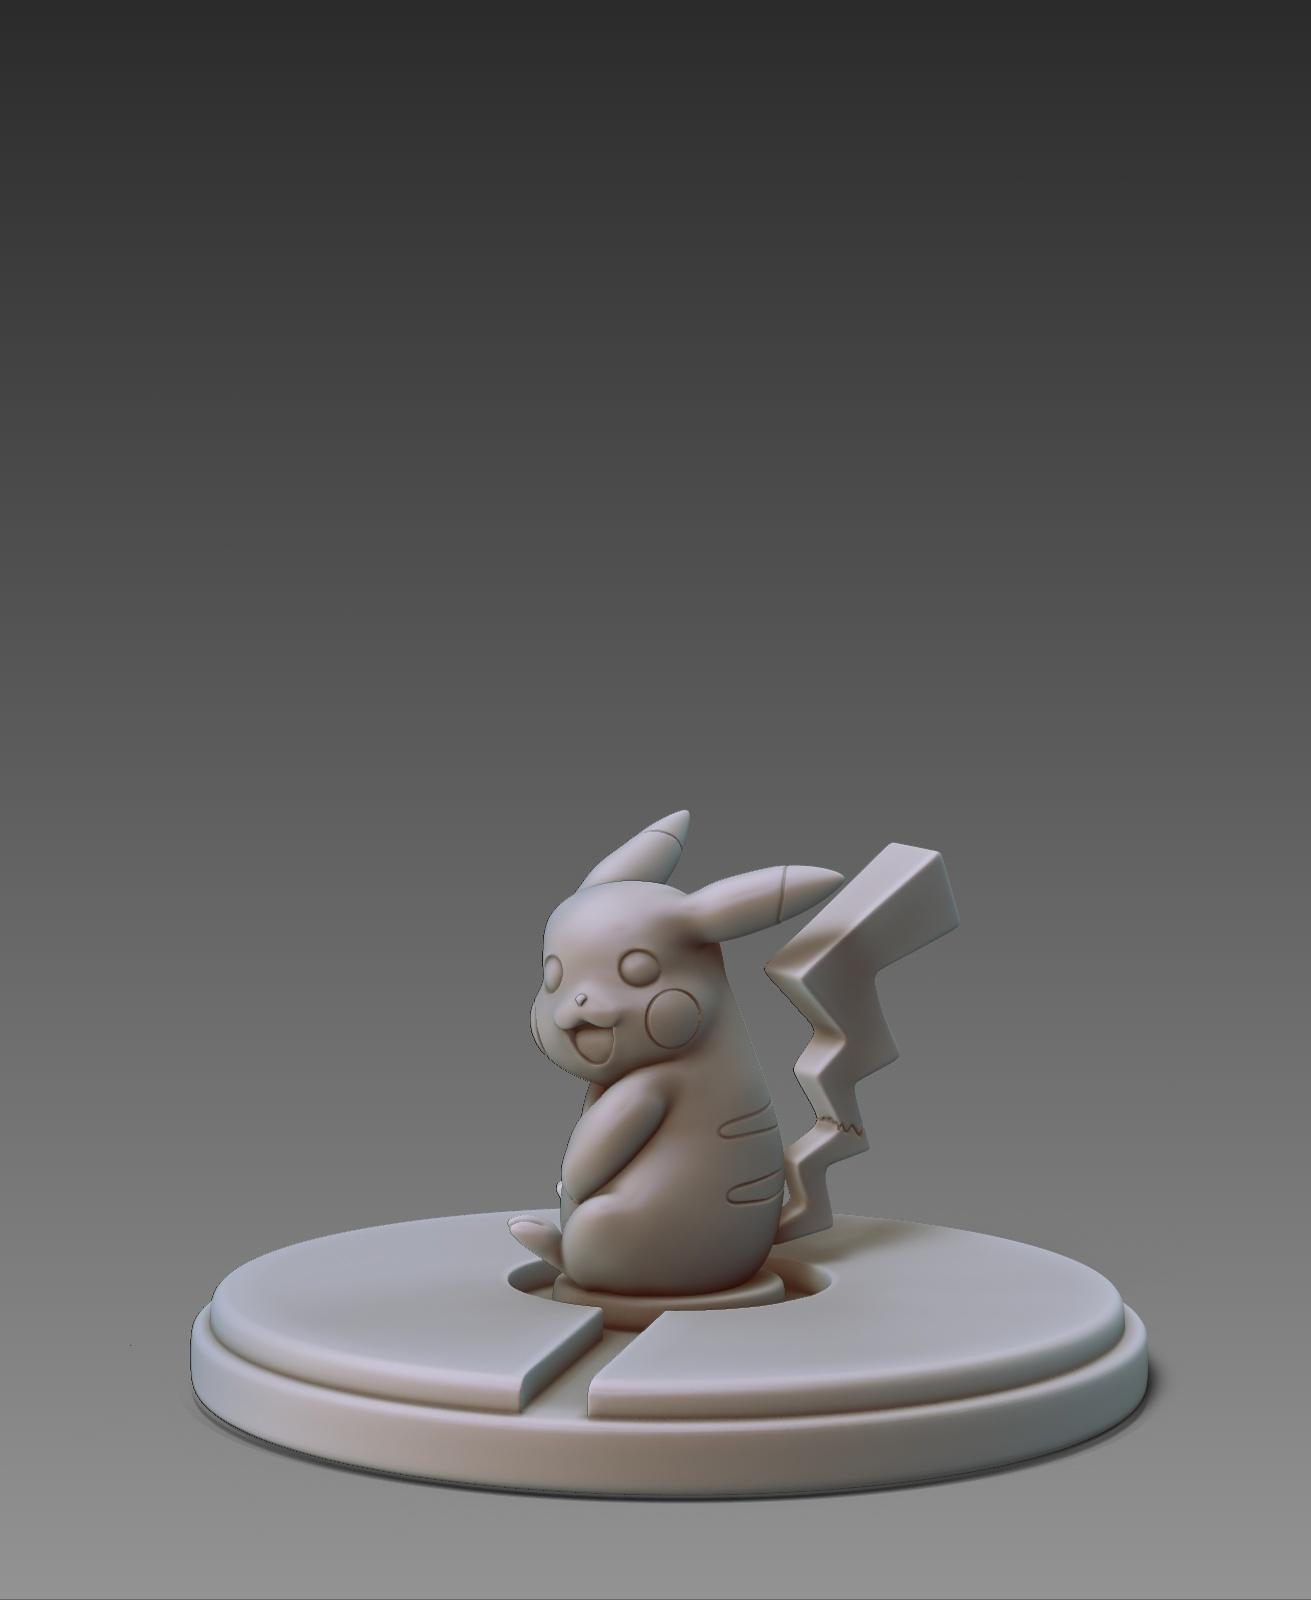 Pikachu-Desk Companion 3d model